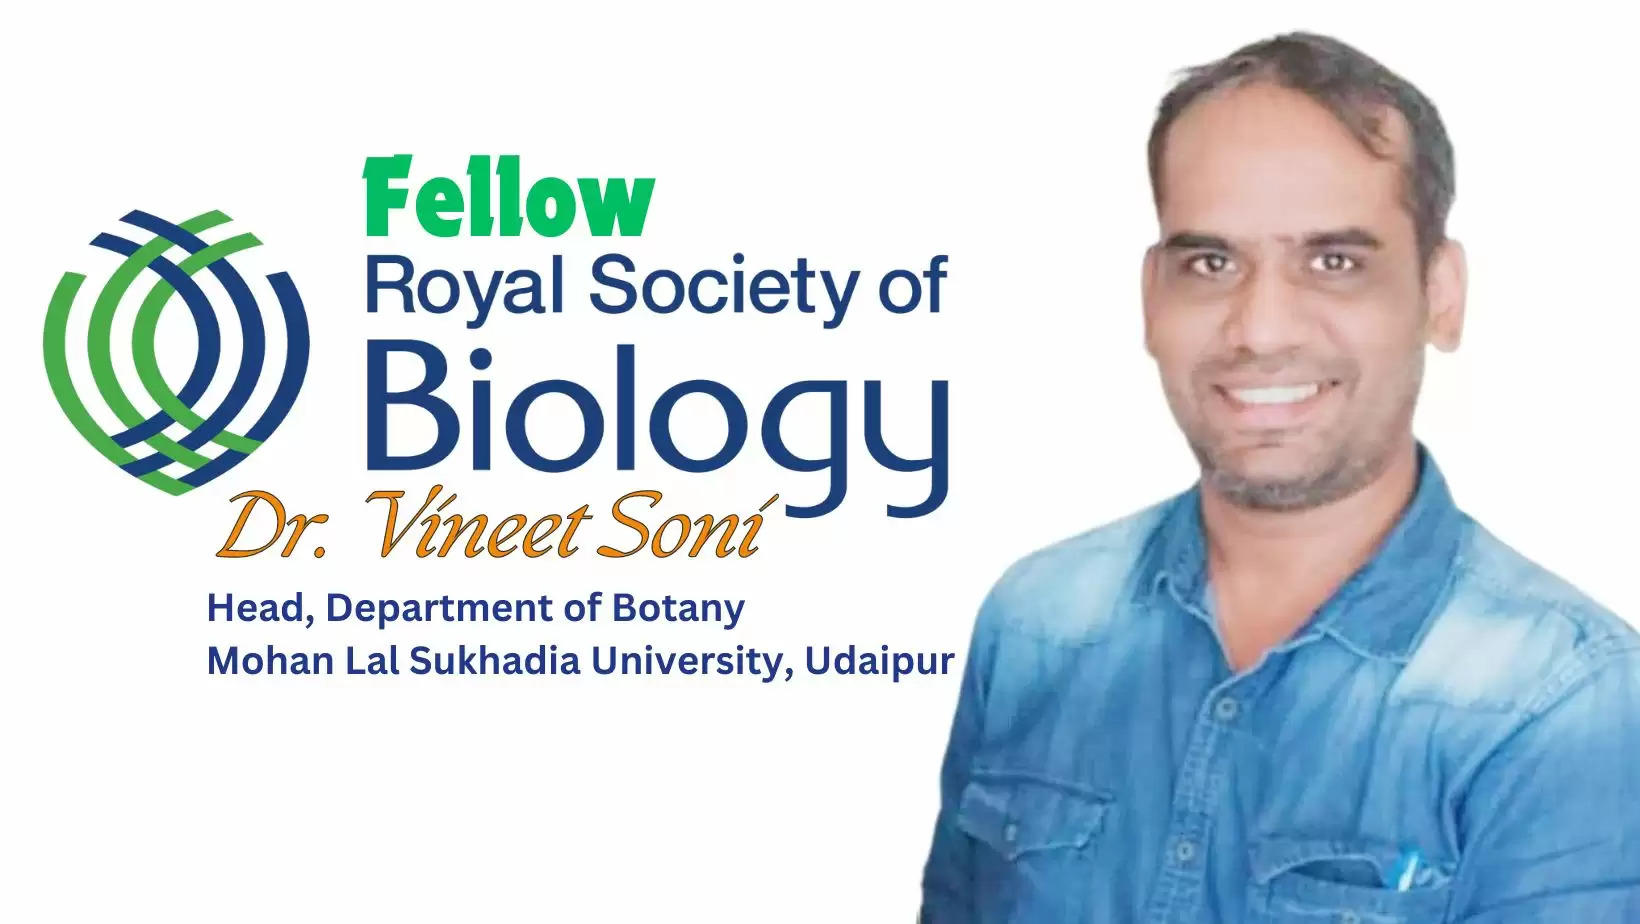 Dr Vineet Soni, Head of Department of Botany at Mohan Lal Sukhadia University Udaipur was accorded Fellowship at the Royal Society of Biology, UK